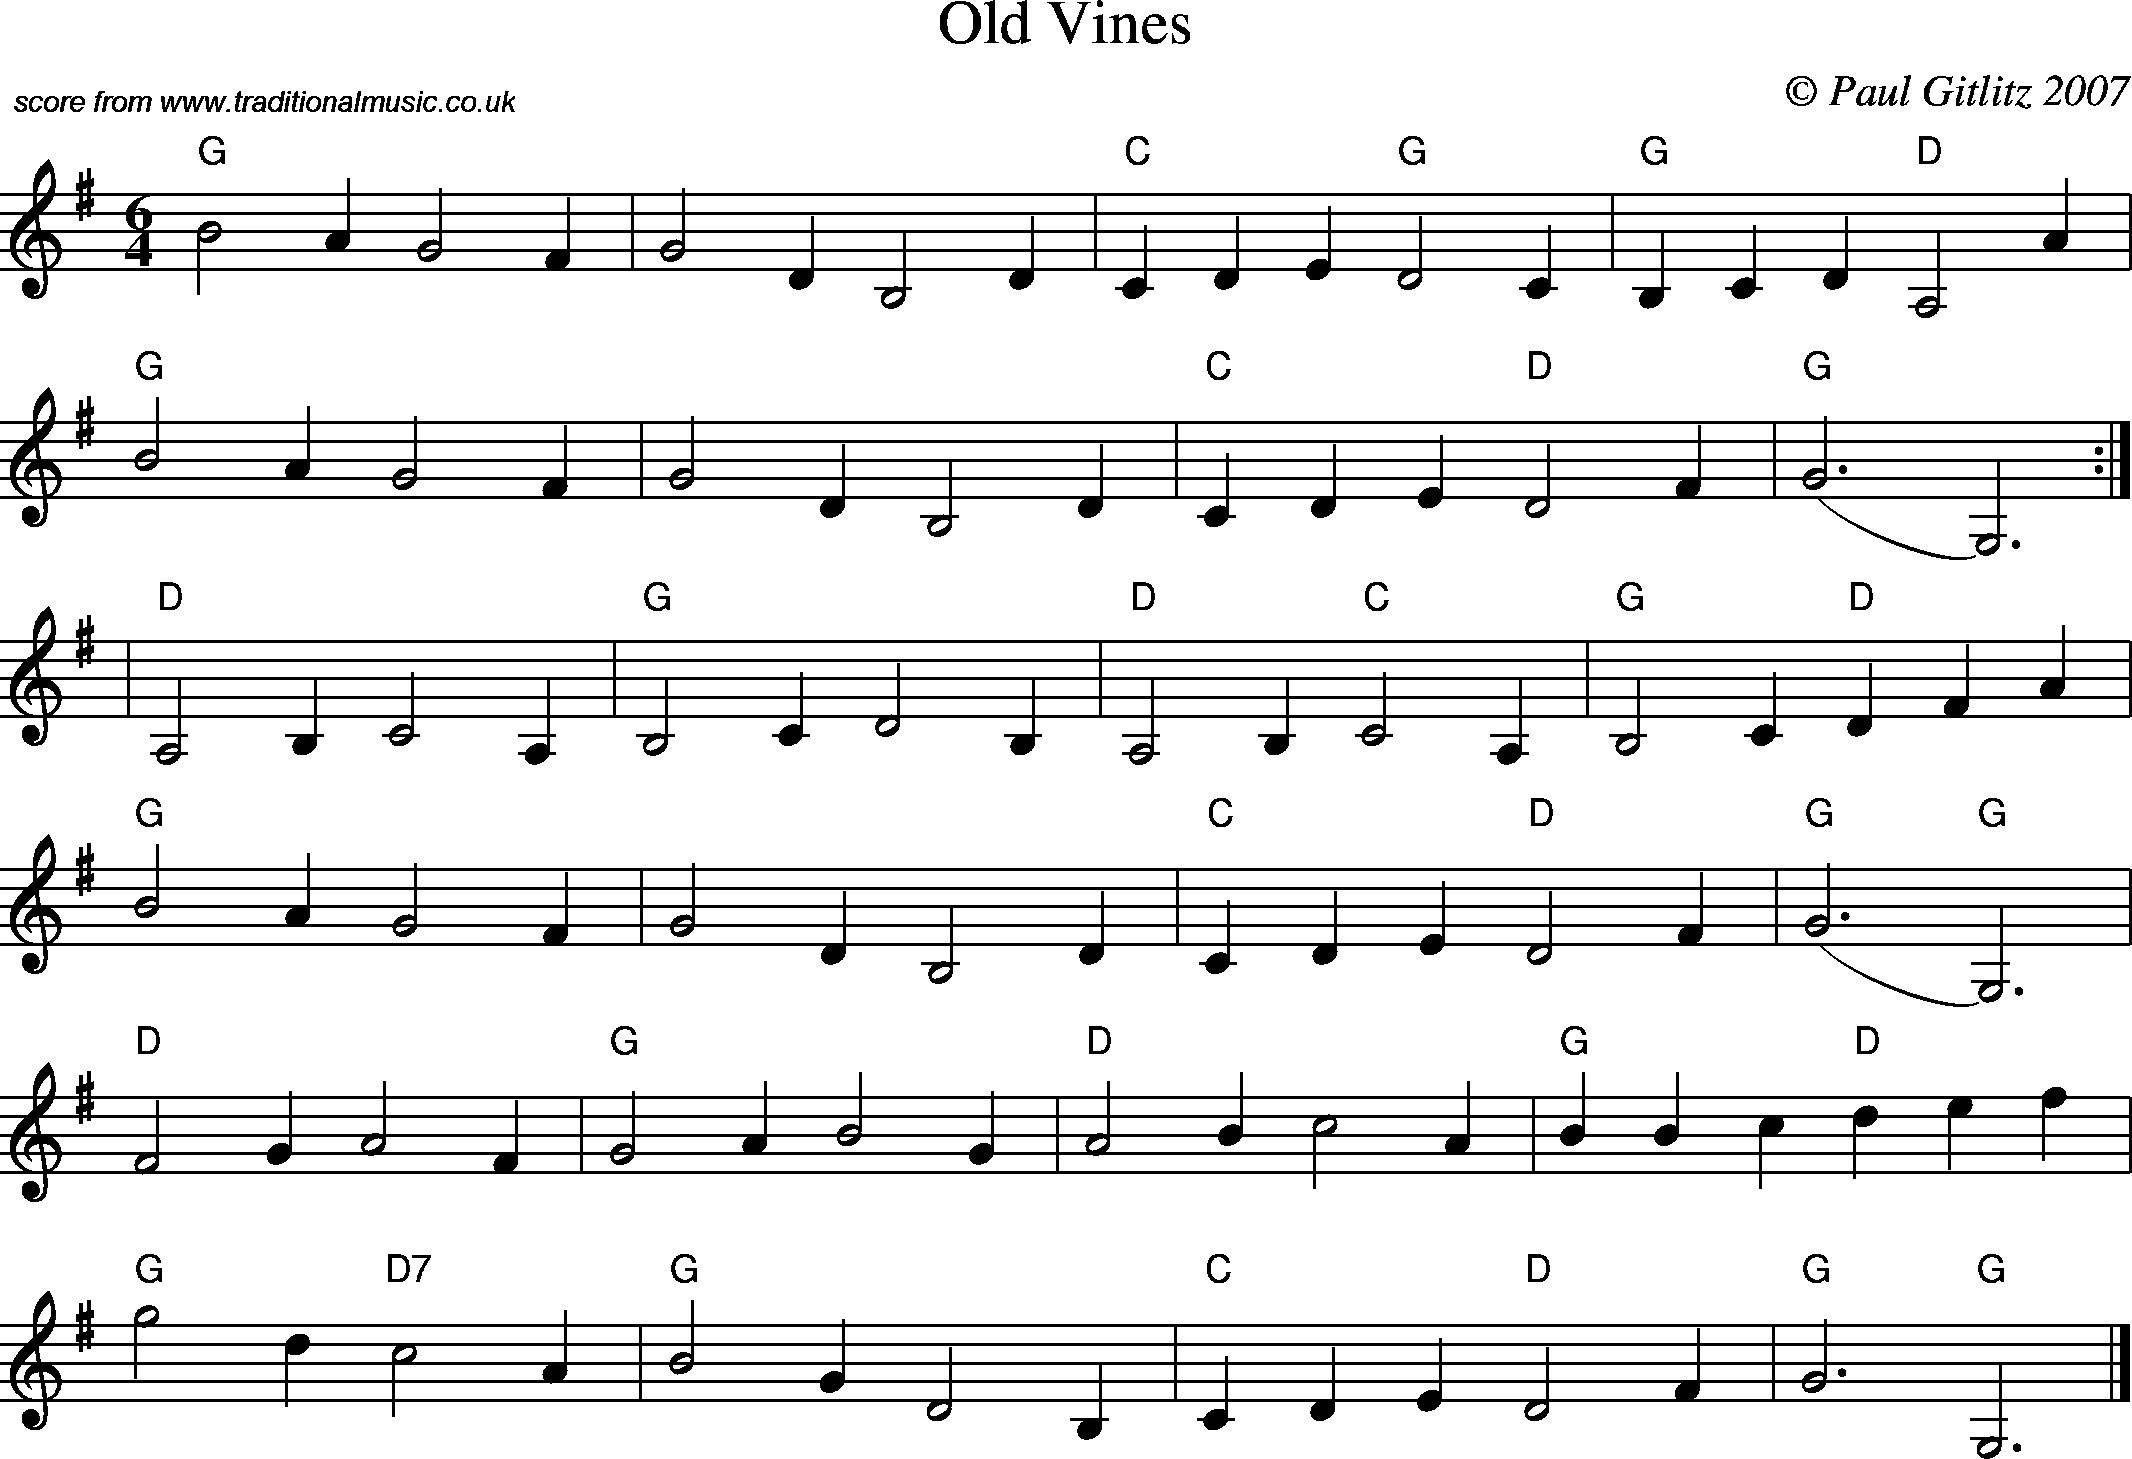 Sheet Music Score for Waltz - Old Vines